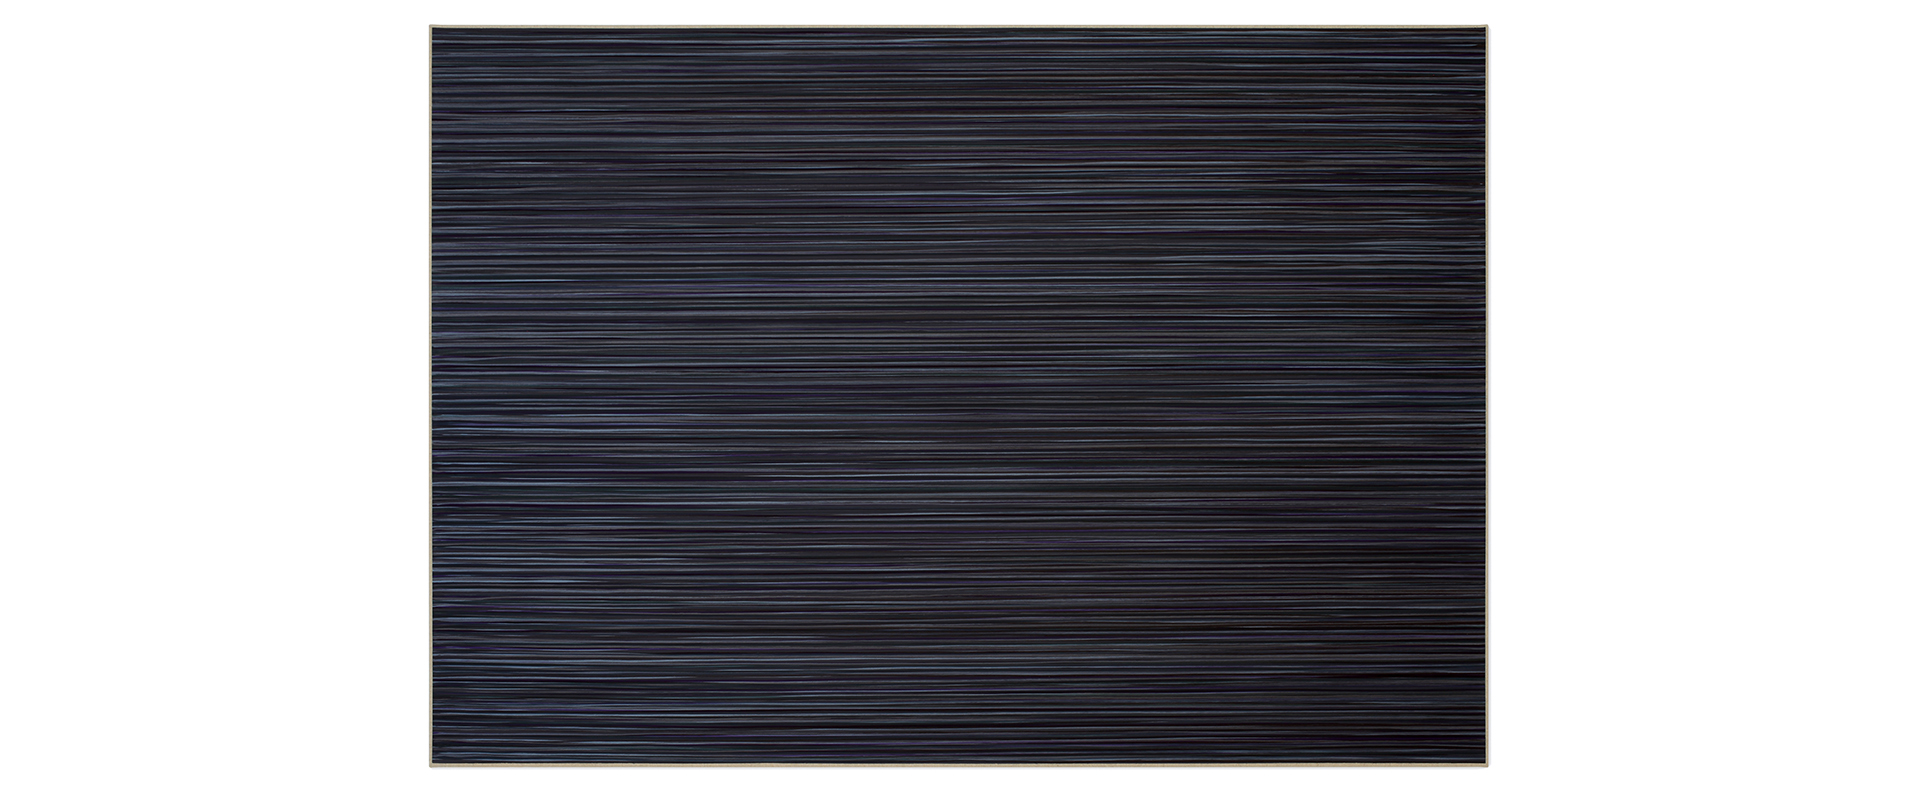 Untitled (2134) - 2021, Acryl auf Leinwand, 70 x 100 cm